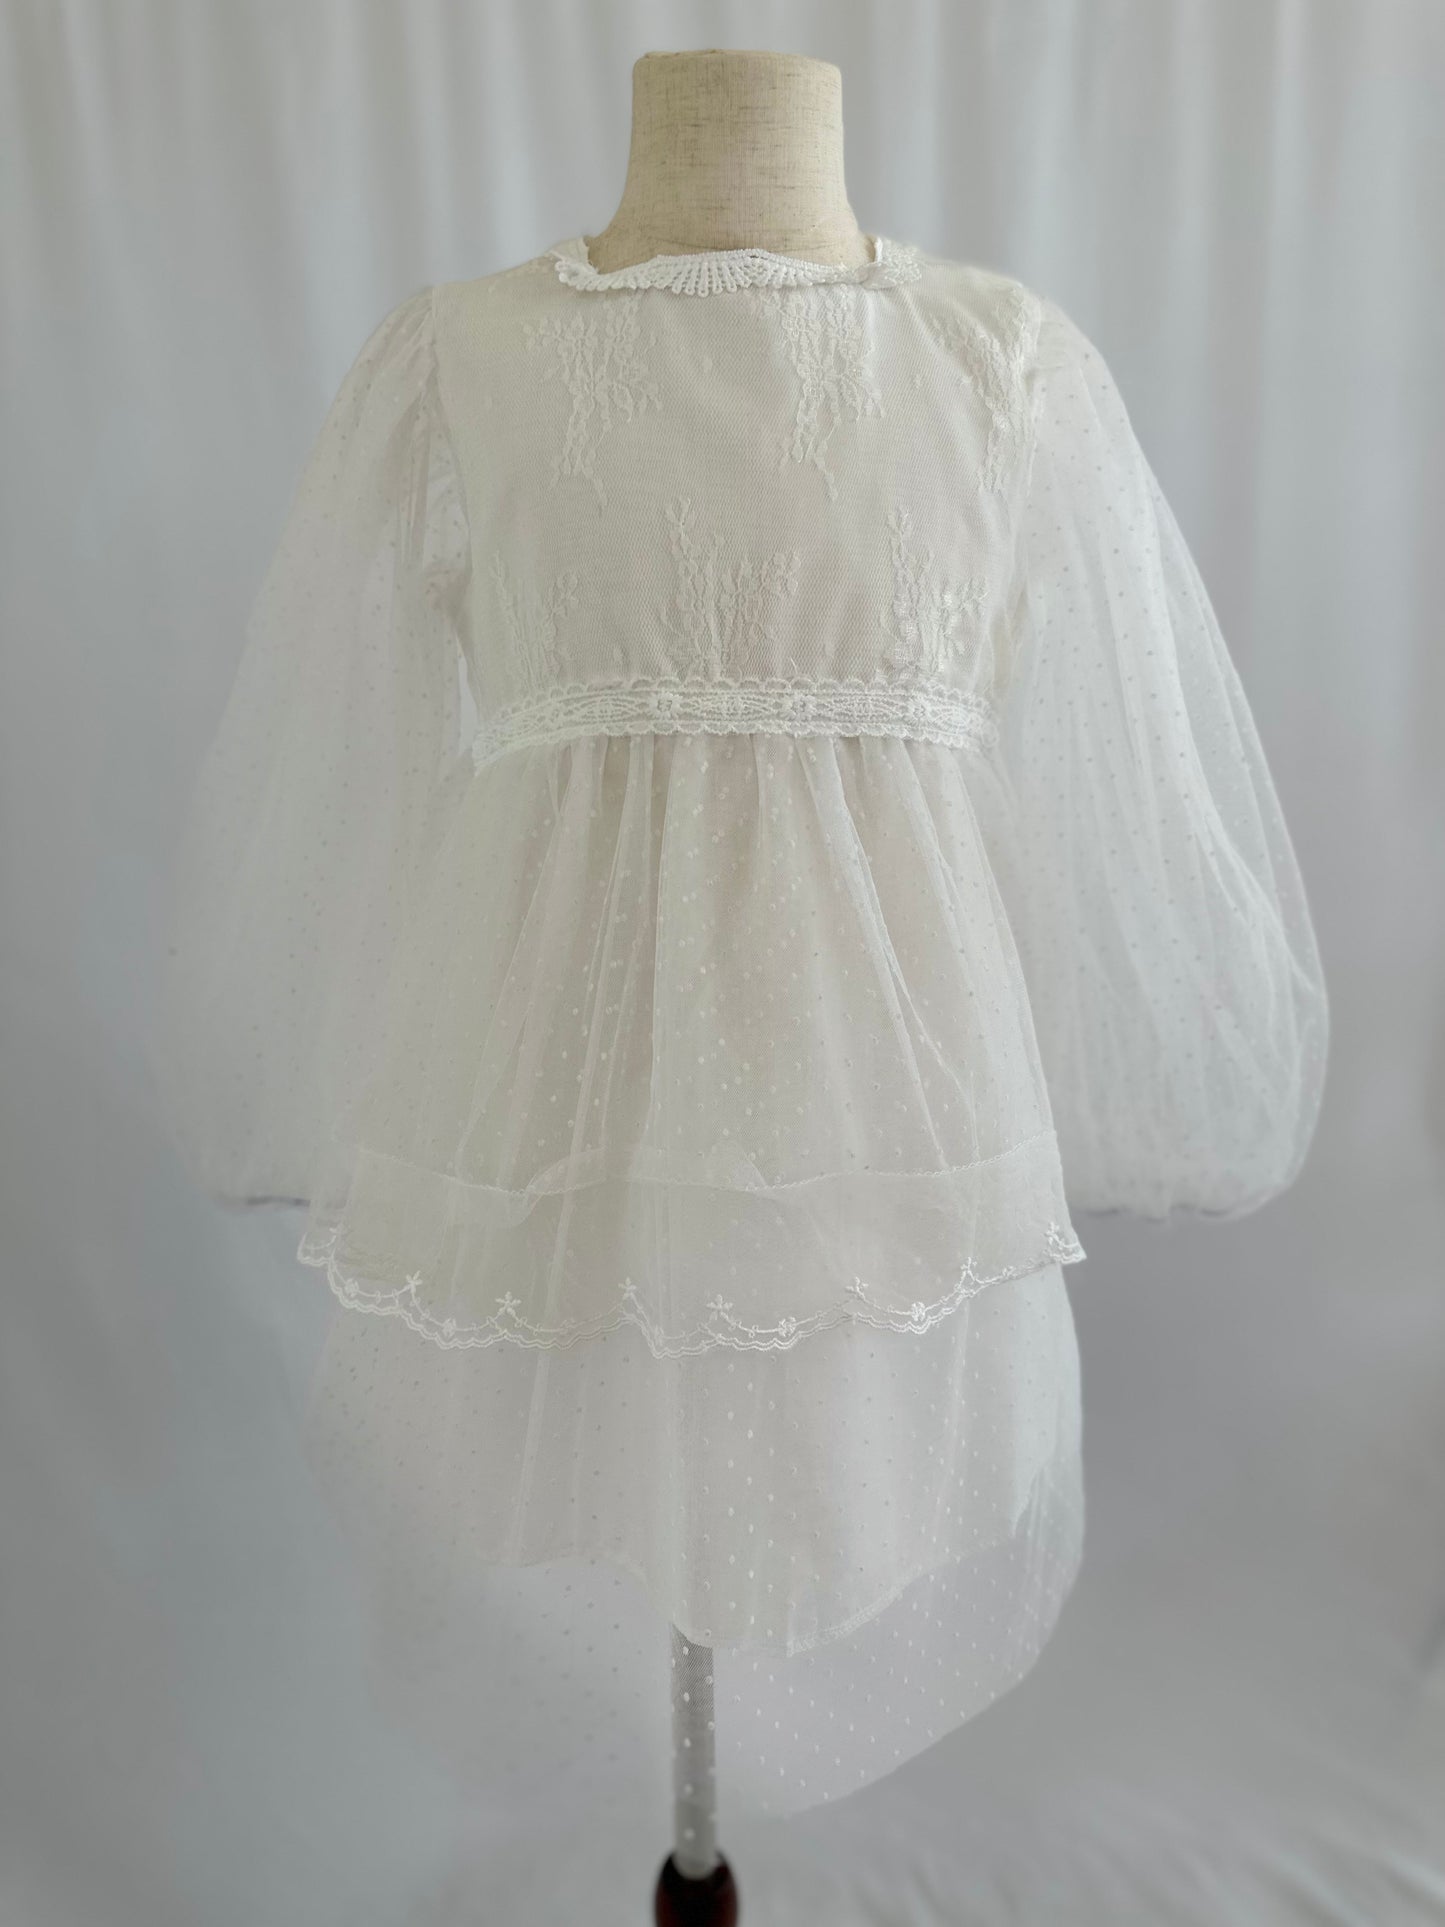 Adorable soft net white dress